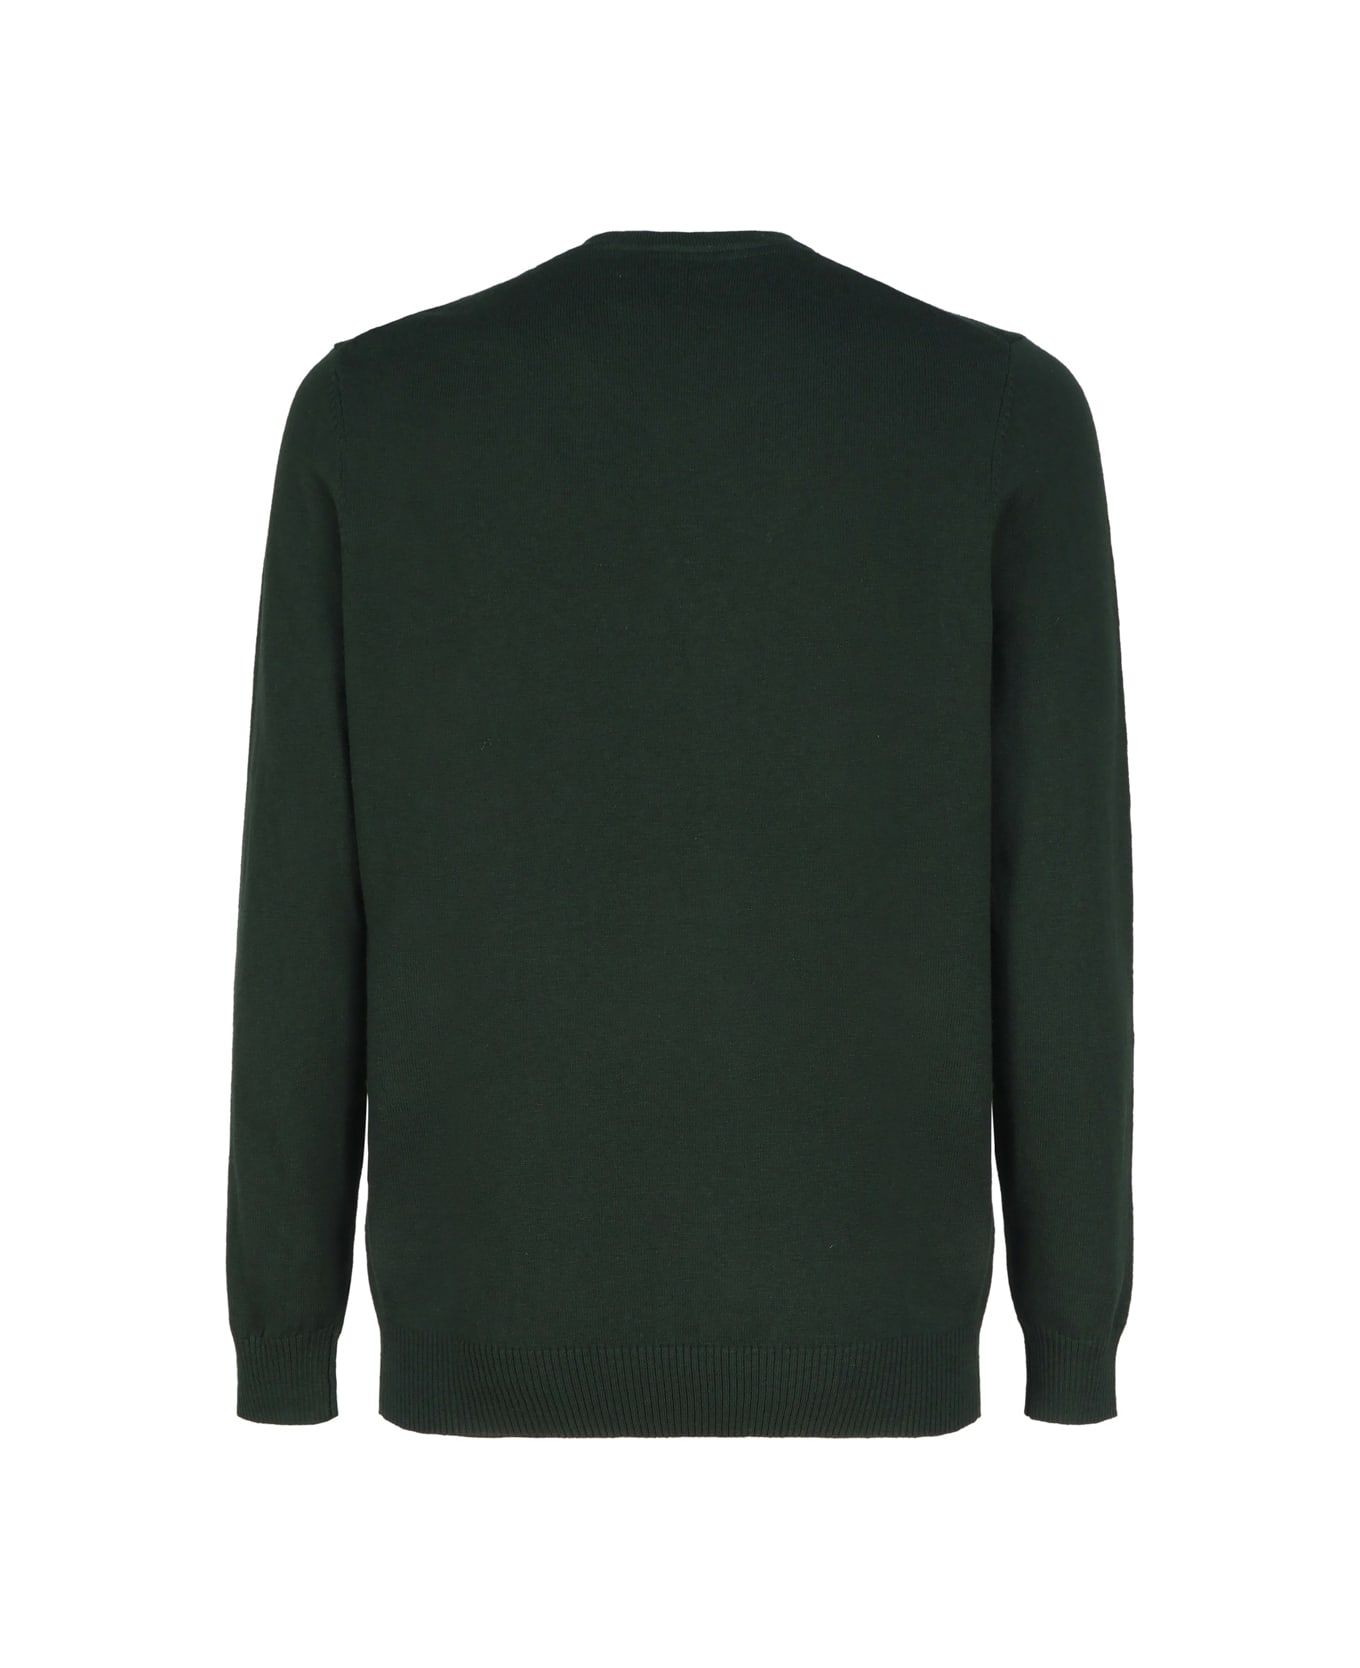 Lyle & Scott Merino Cotton Sweater - Green